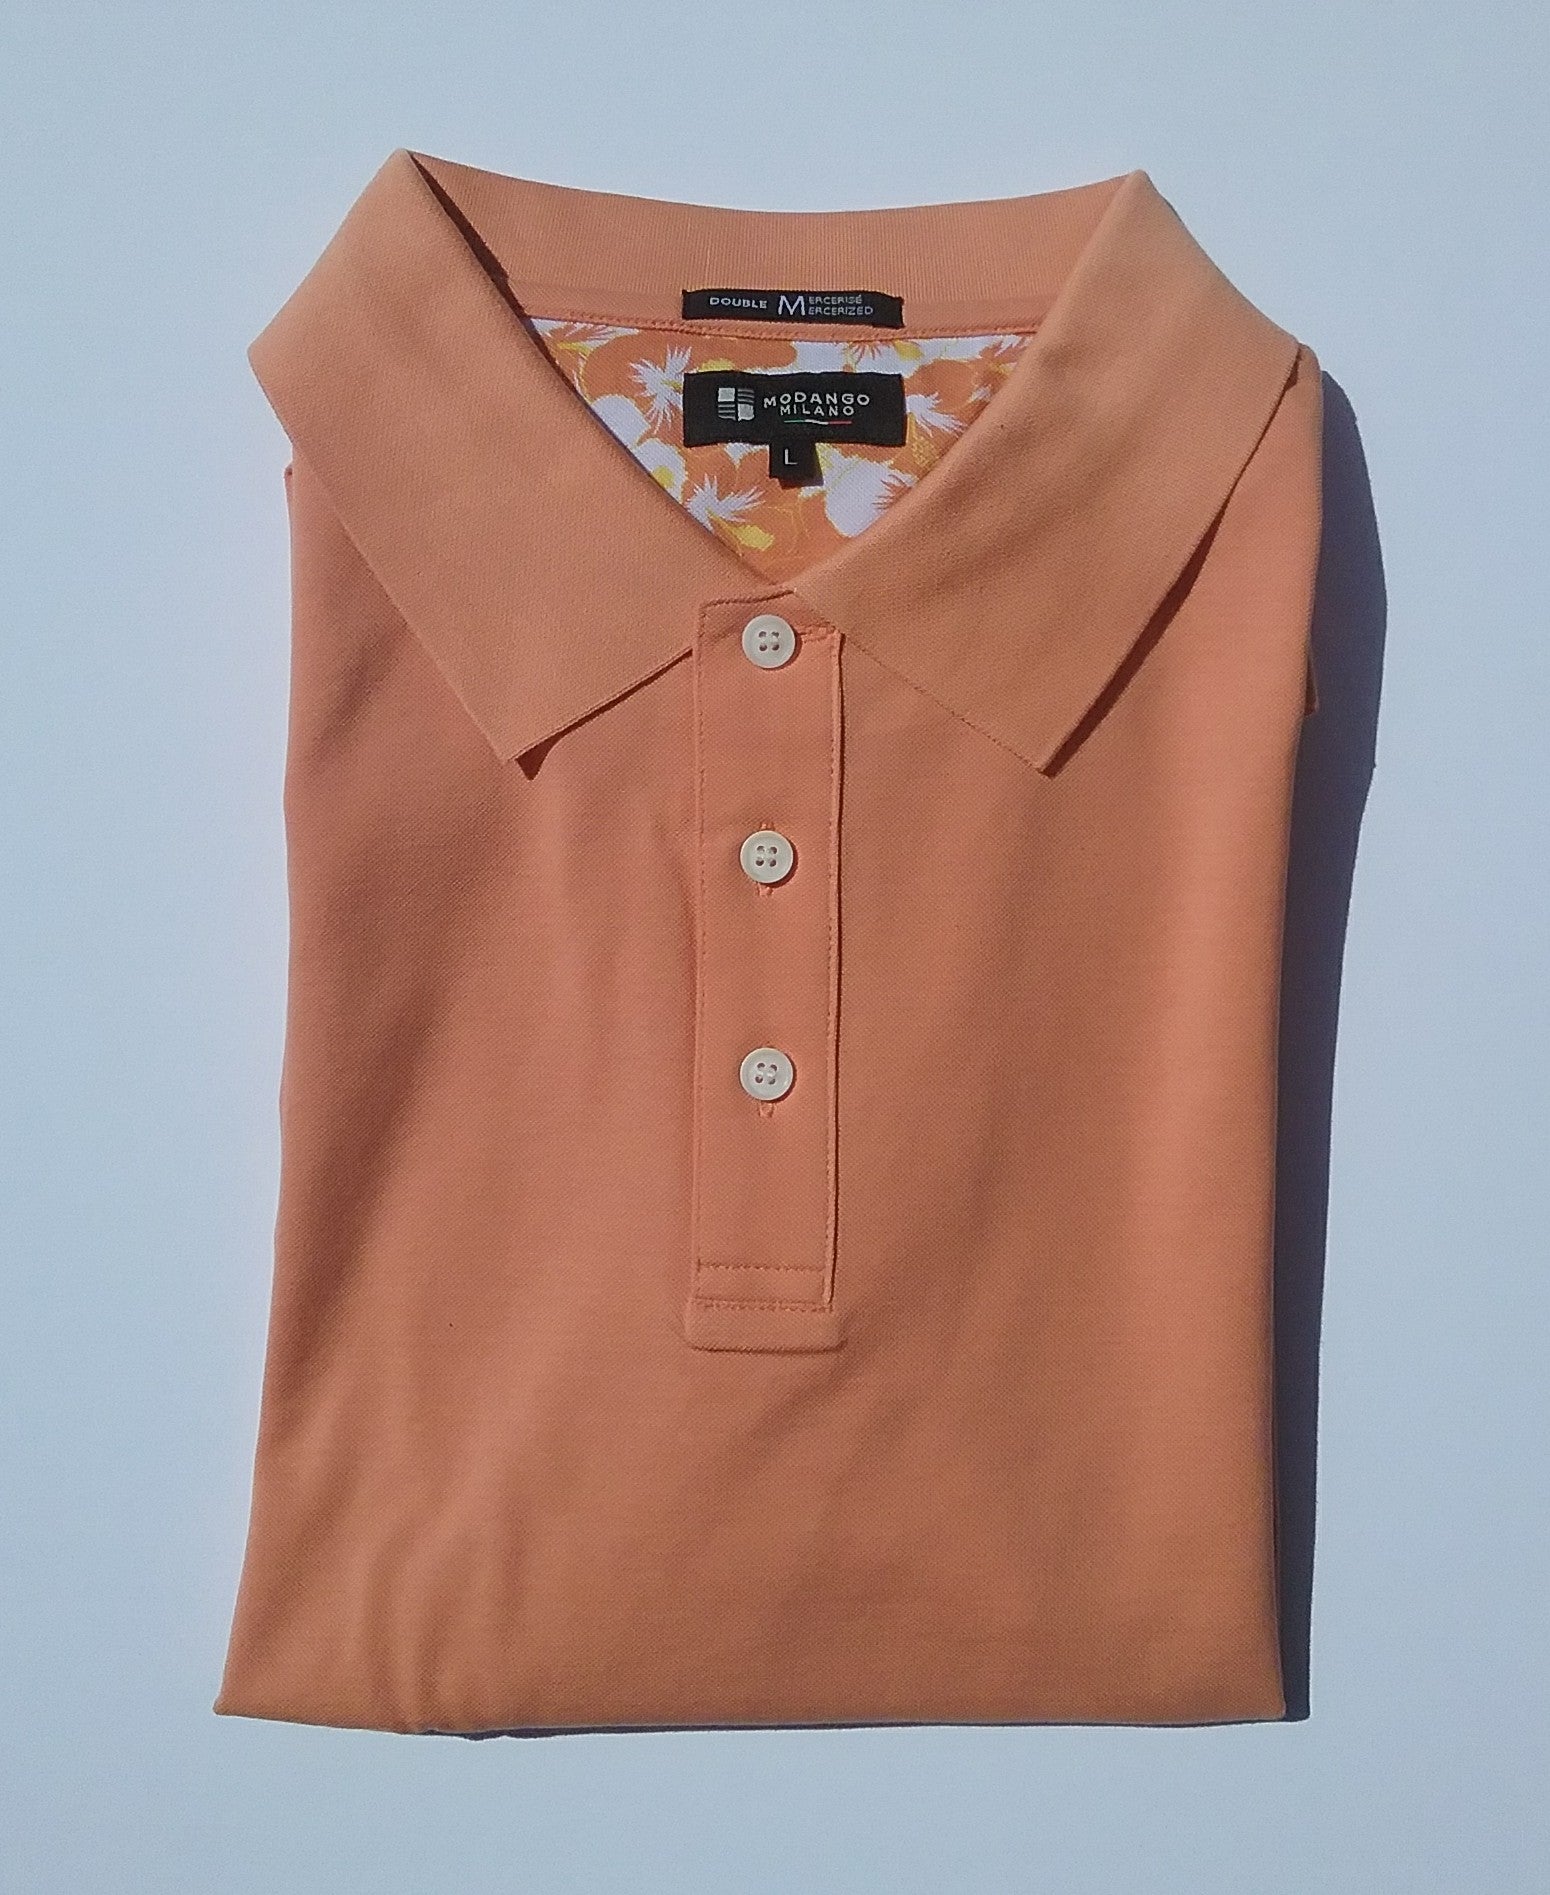 Modango Milano vibrant orange color polo shirt. Mercerized cotton material  